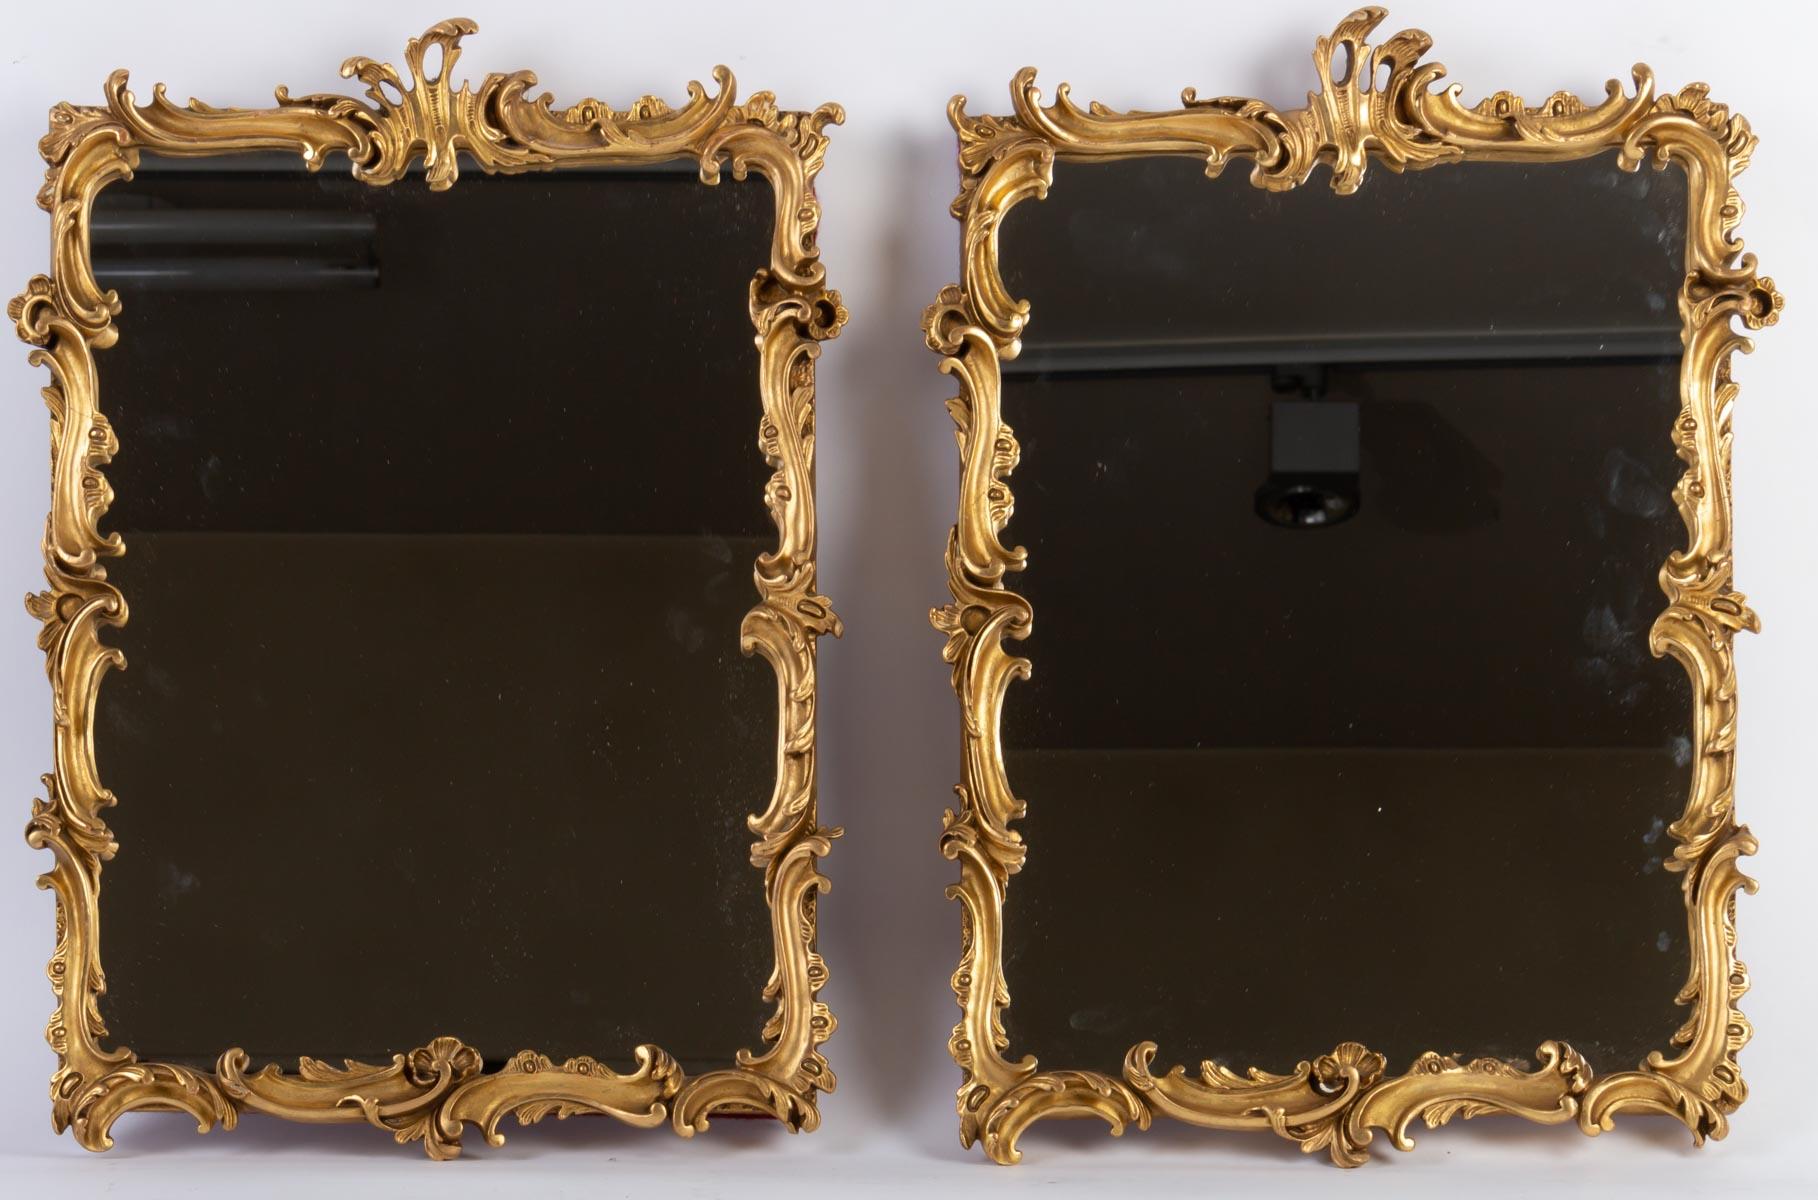 Suite of 4 golden stucco mirrors, 19th century, Napoleon III period.
Measures: H 48 cm, W 35 cm, D 5 cm.